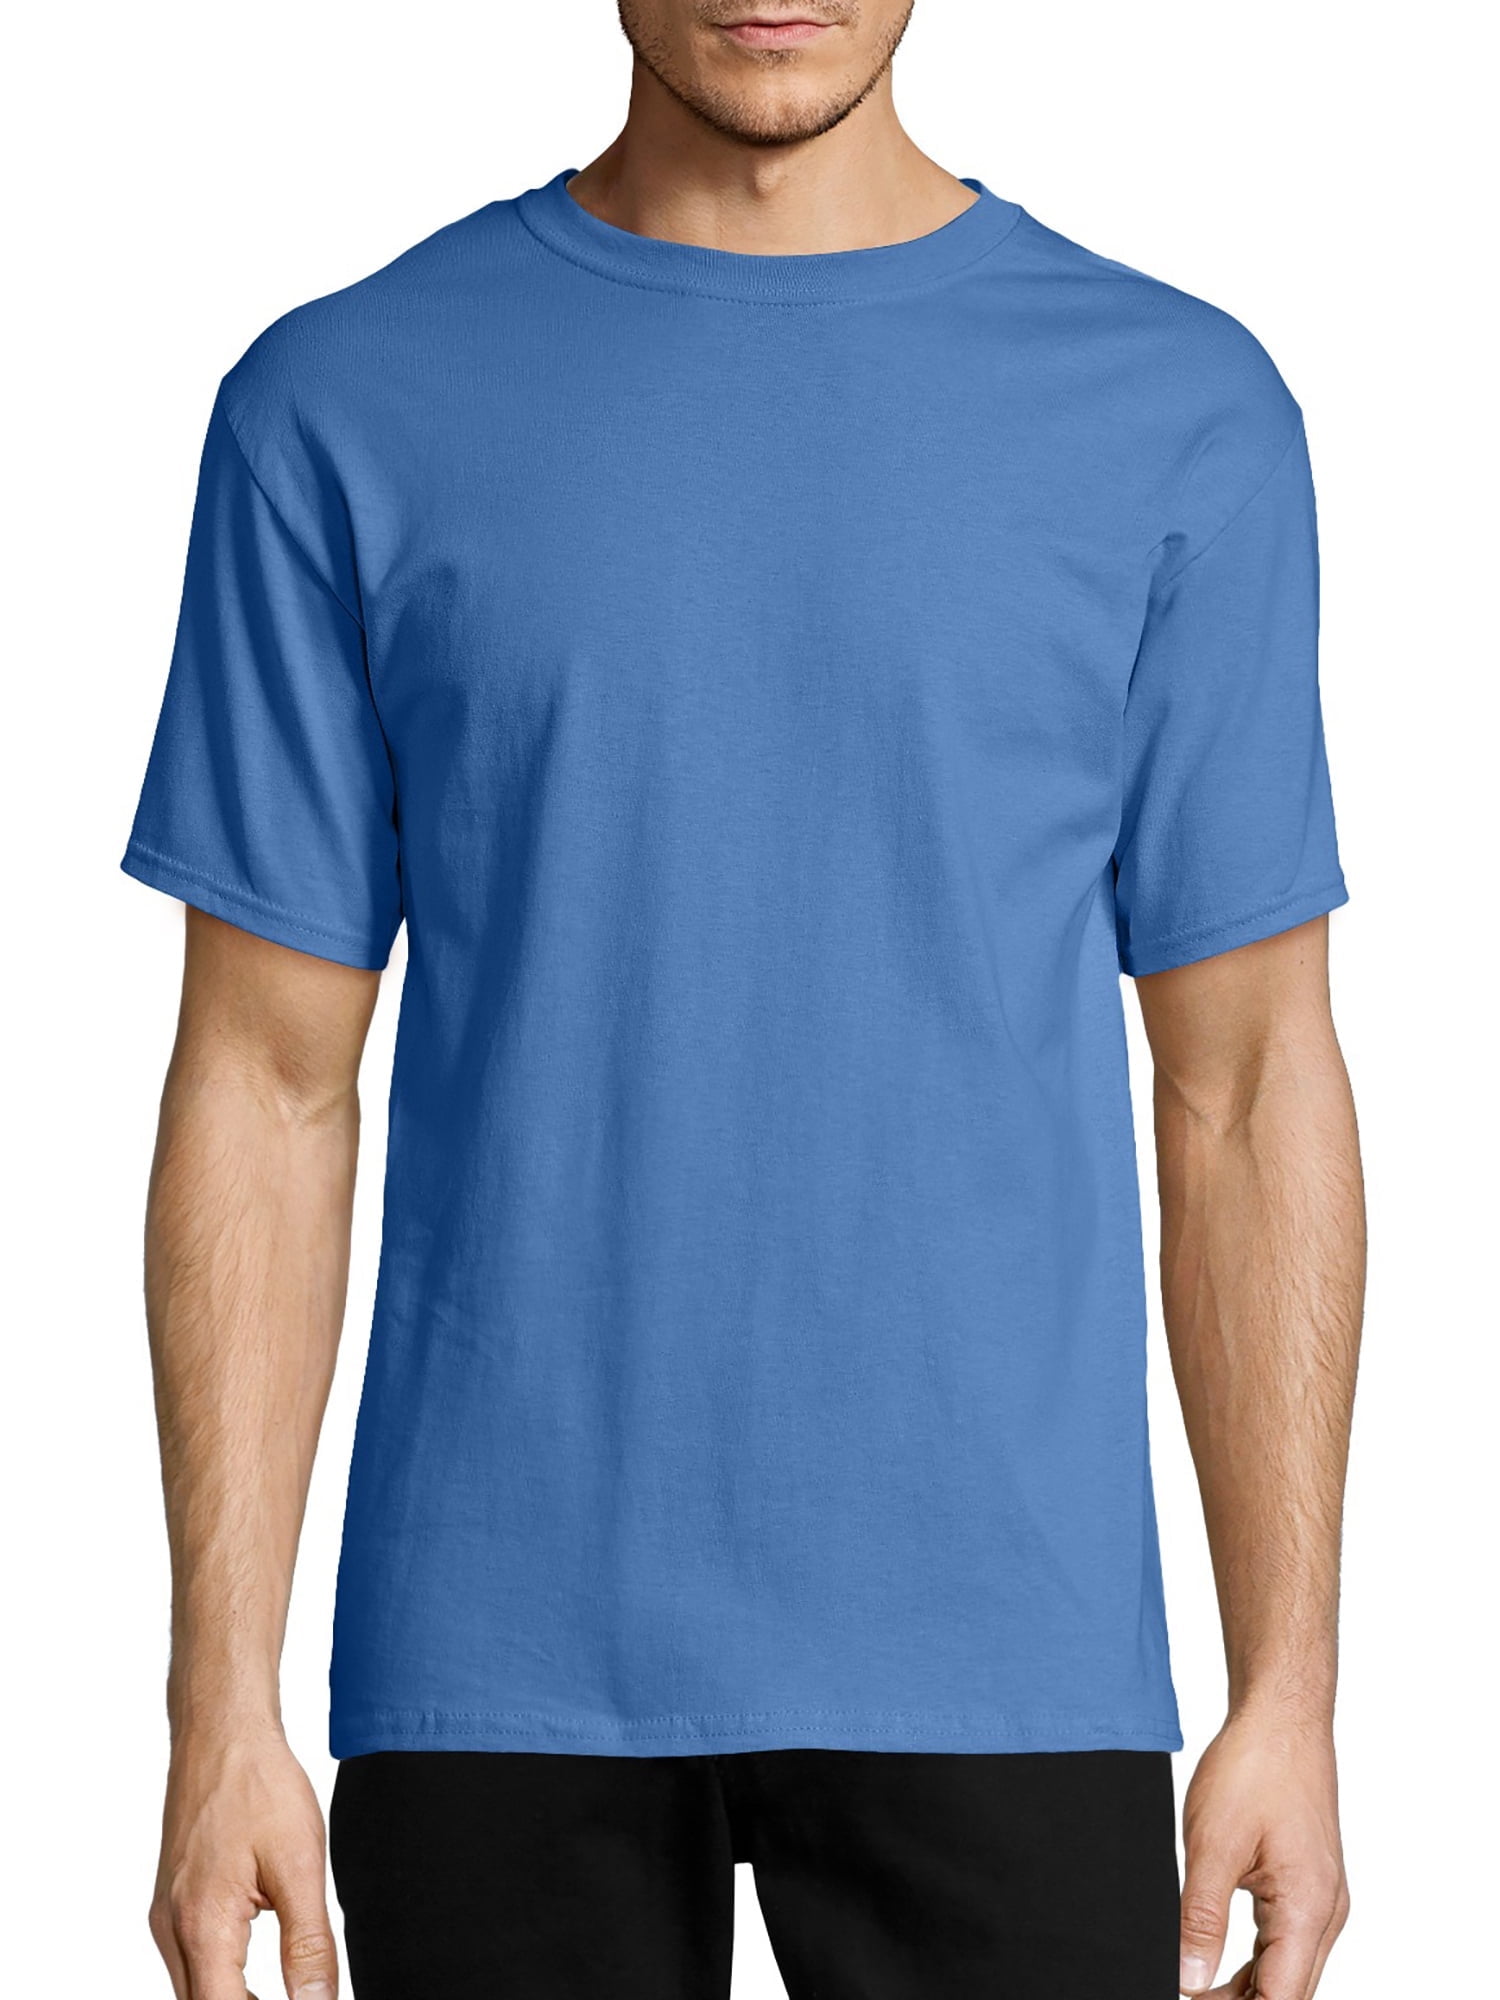 Hanes Authentic Men's T-Shirt (Big & Tall Sizes Available) Carolina ...